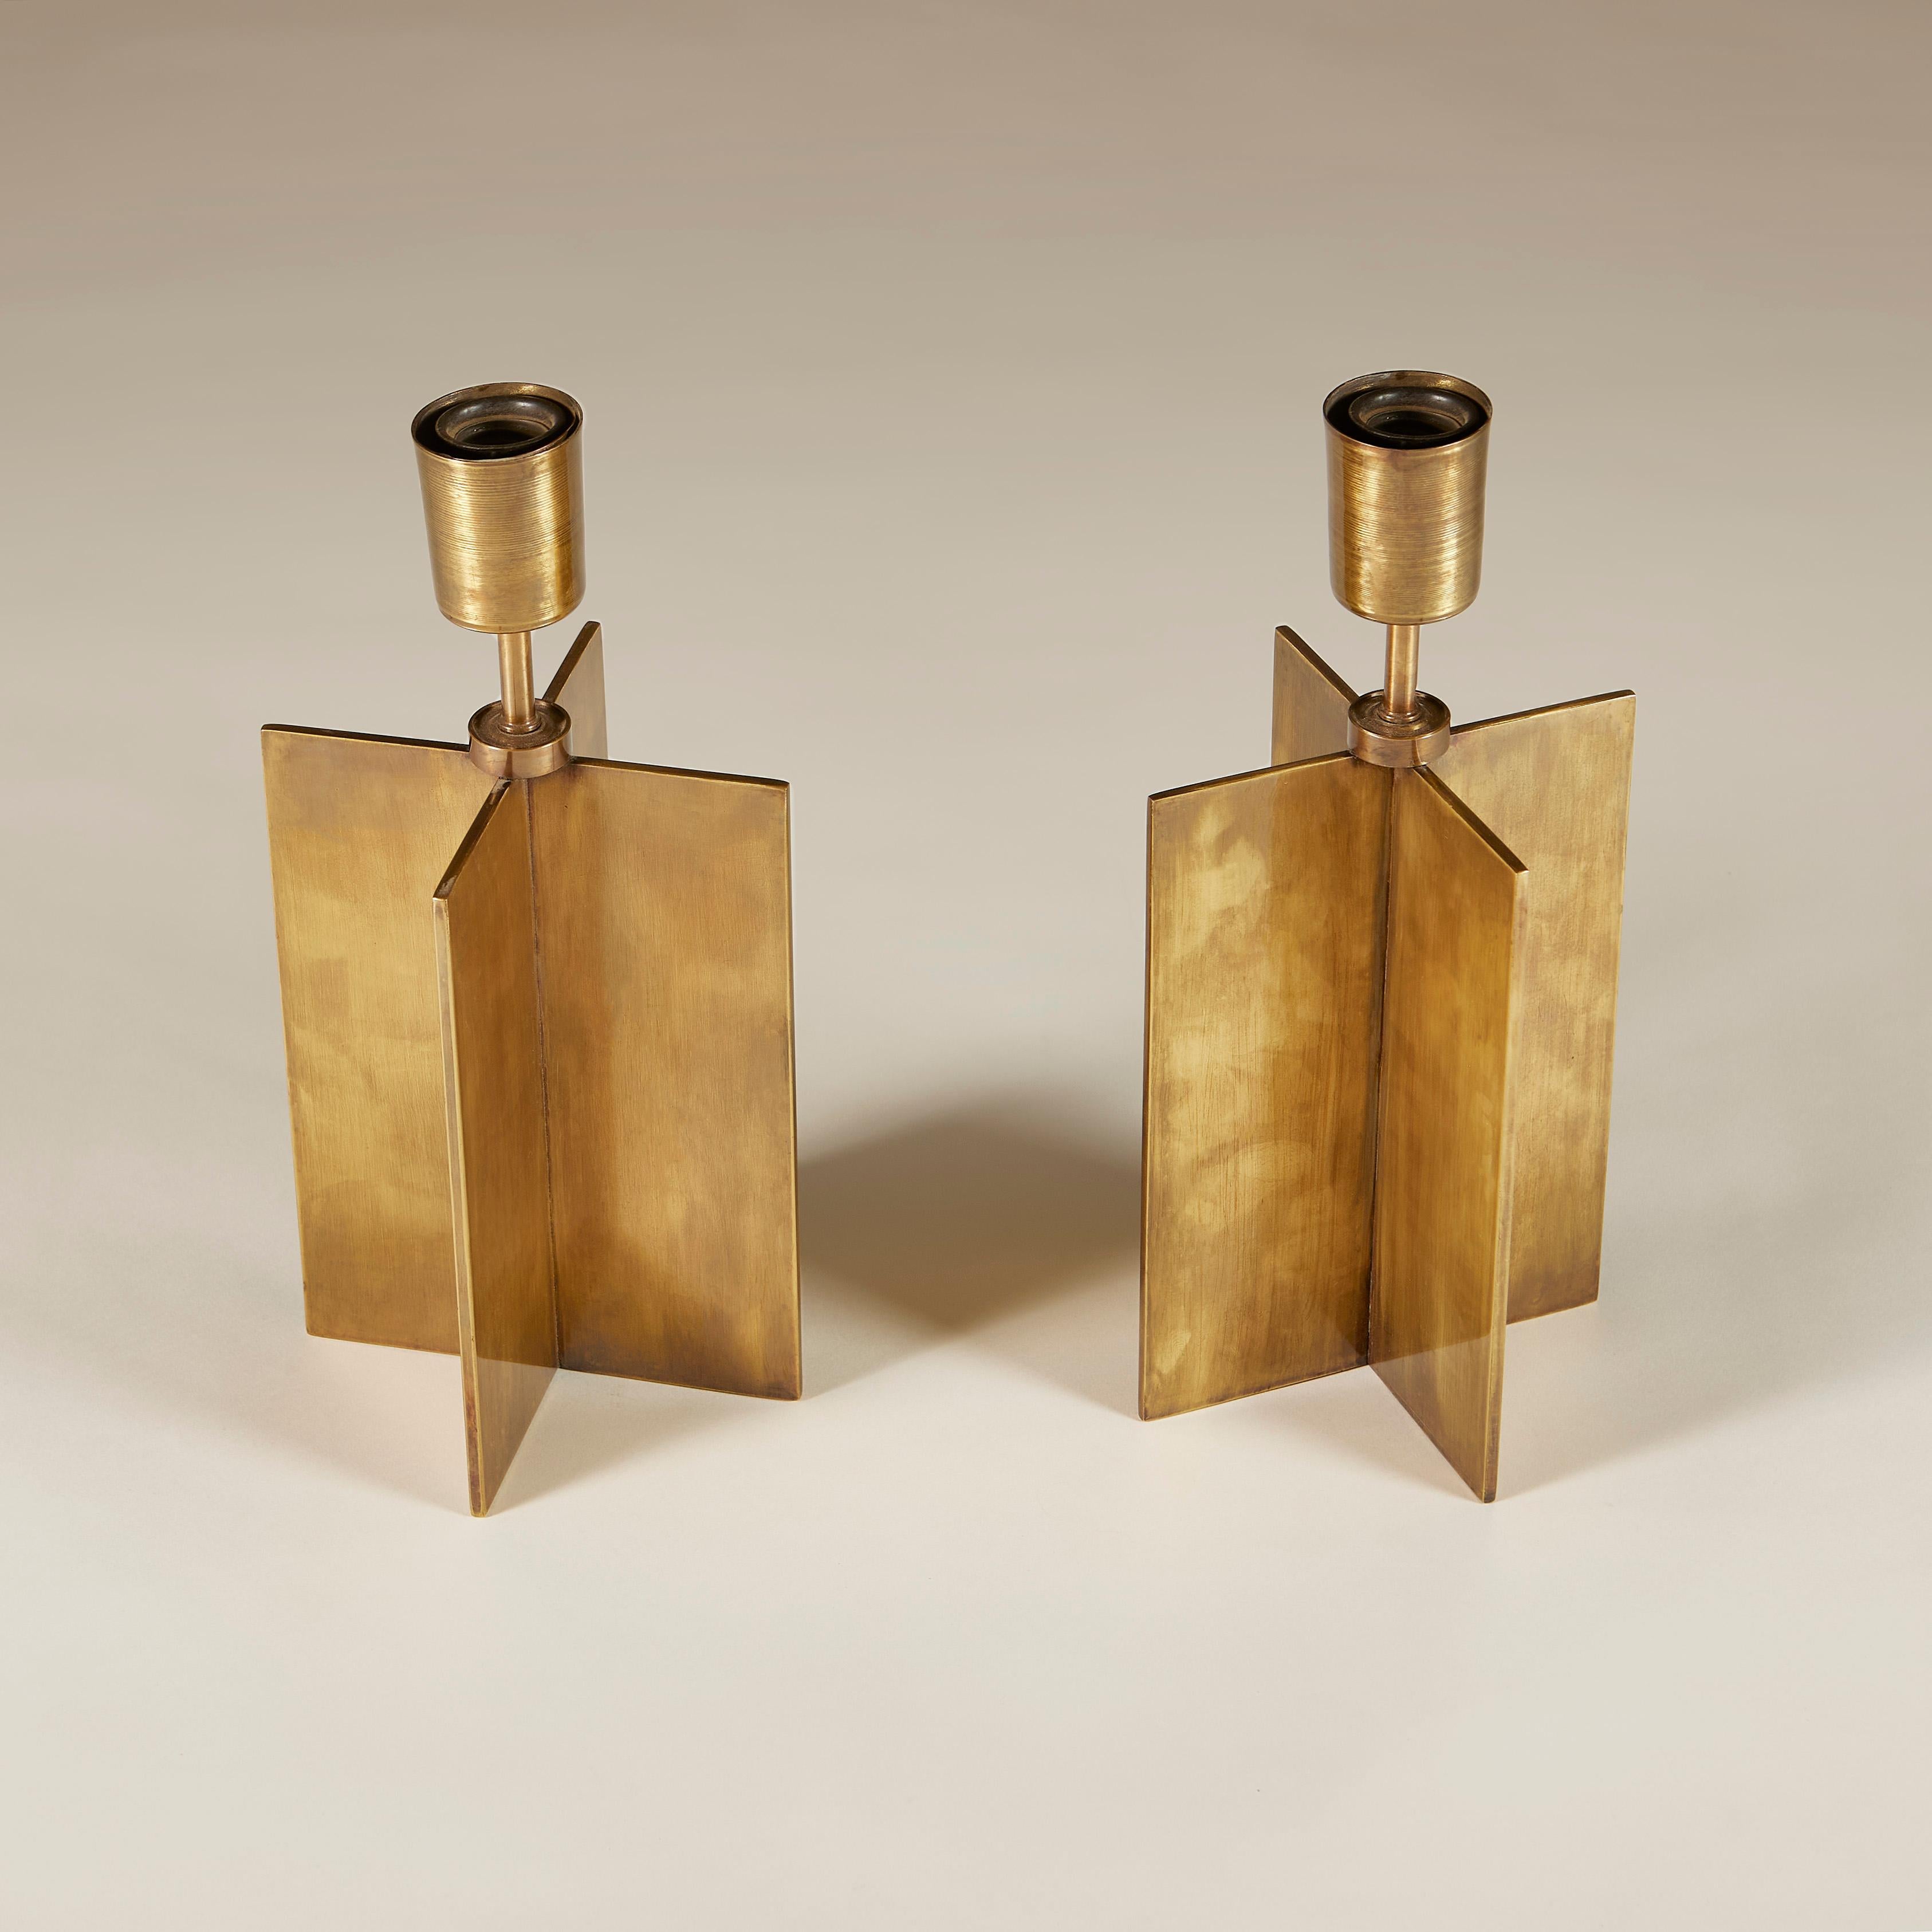 Pair of Original Jean-Michel Frank “Croisillon” Bronze Table Lamps, circa 1935 In Good Condition For Sale In London, GB